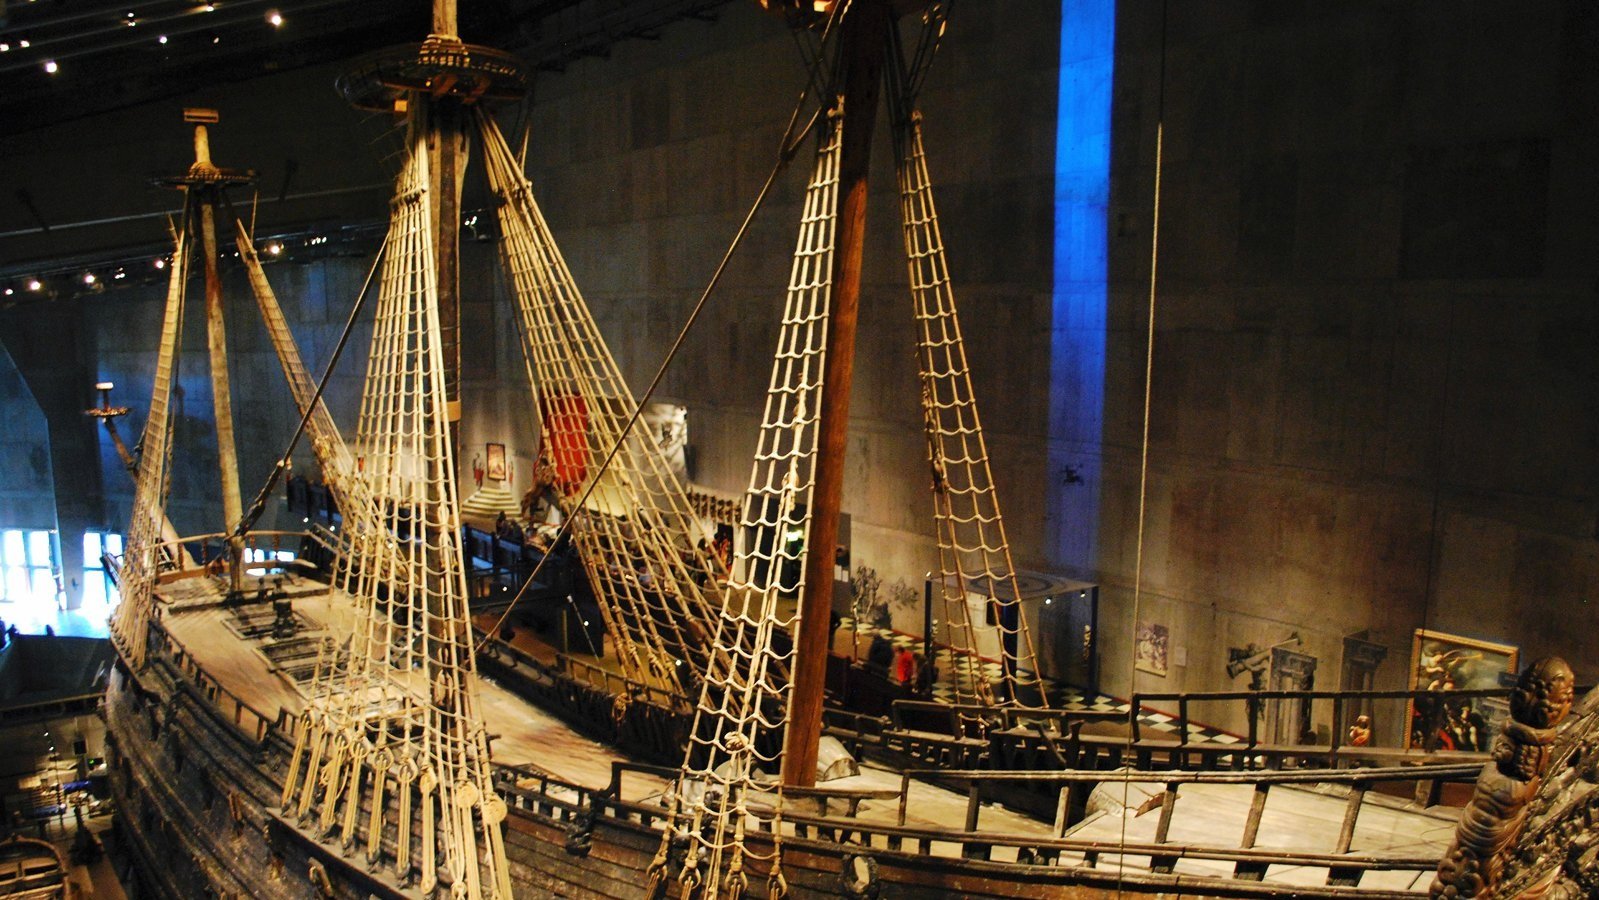 The Vasa Ship Museum (photo: Hugh Llewelyn, Flickr, CC BY 2.0)